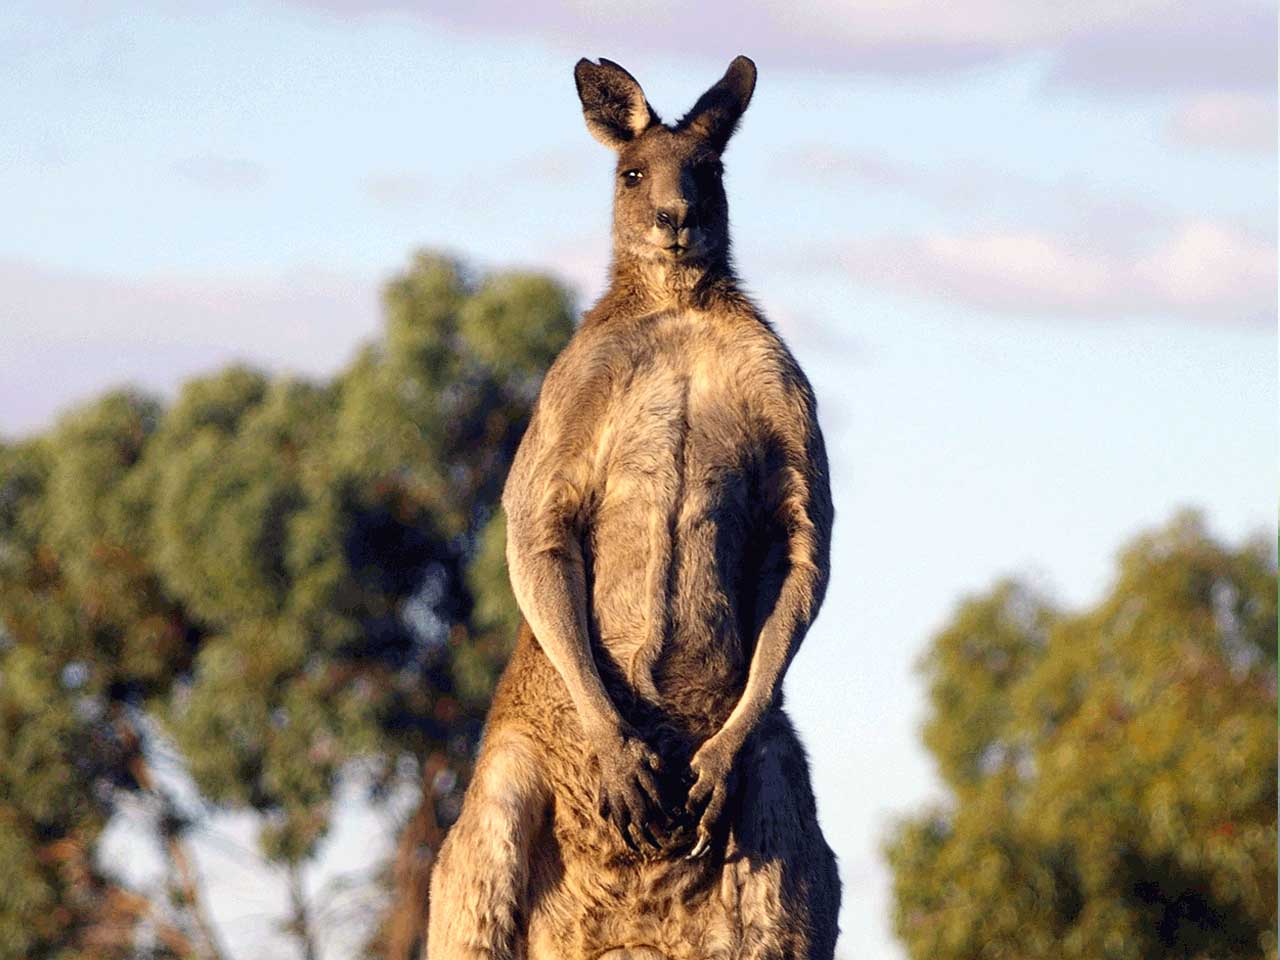 kangaroo standing upright